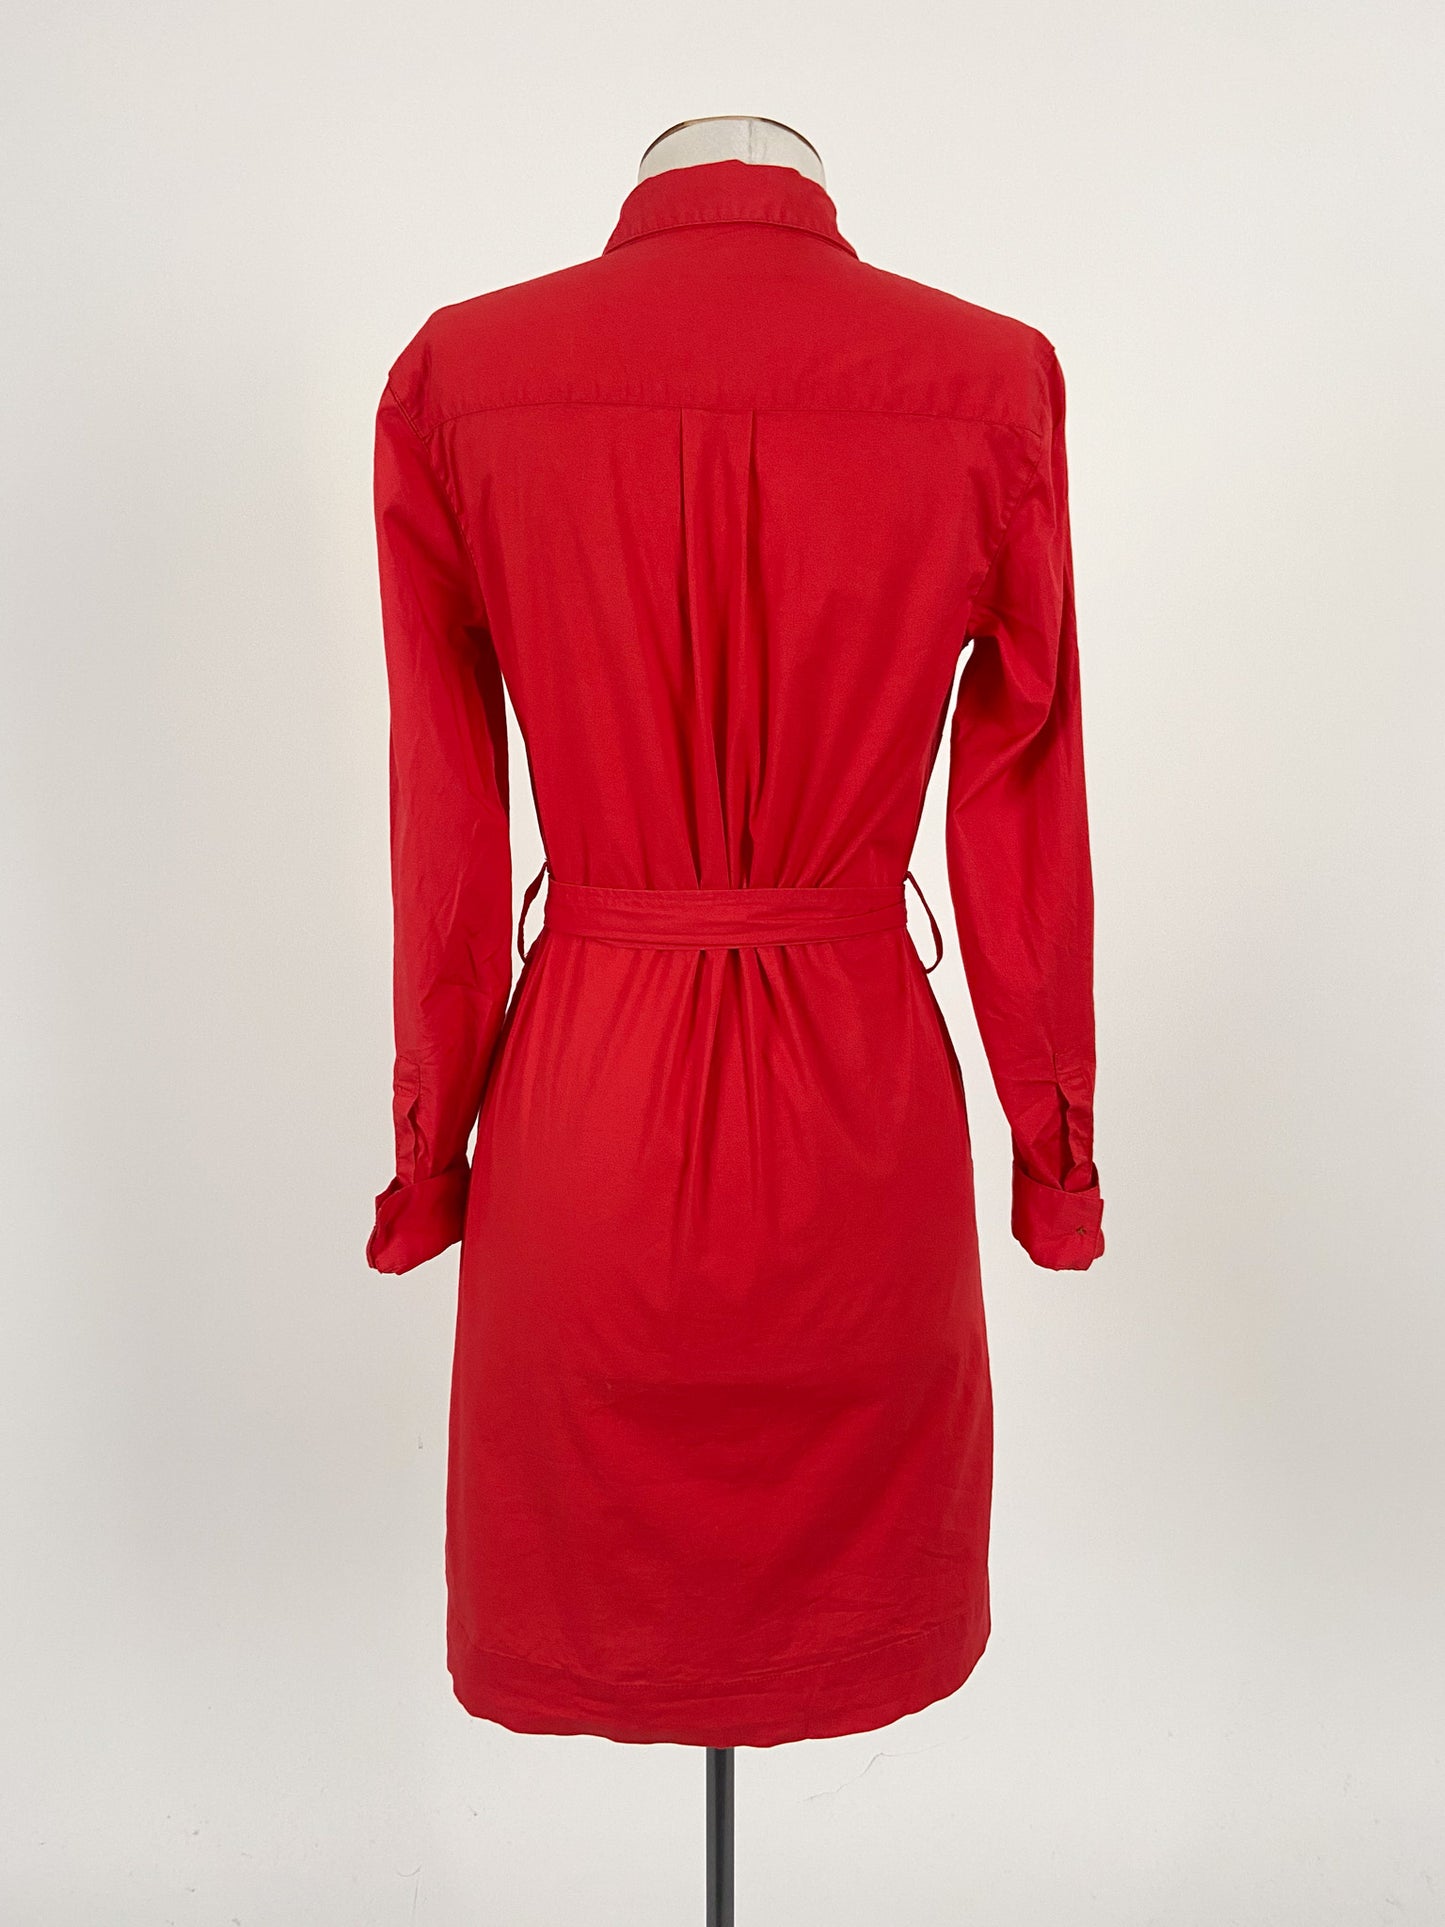 Banana Republic | Red Casual/Workwear Dress | Size 6